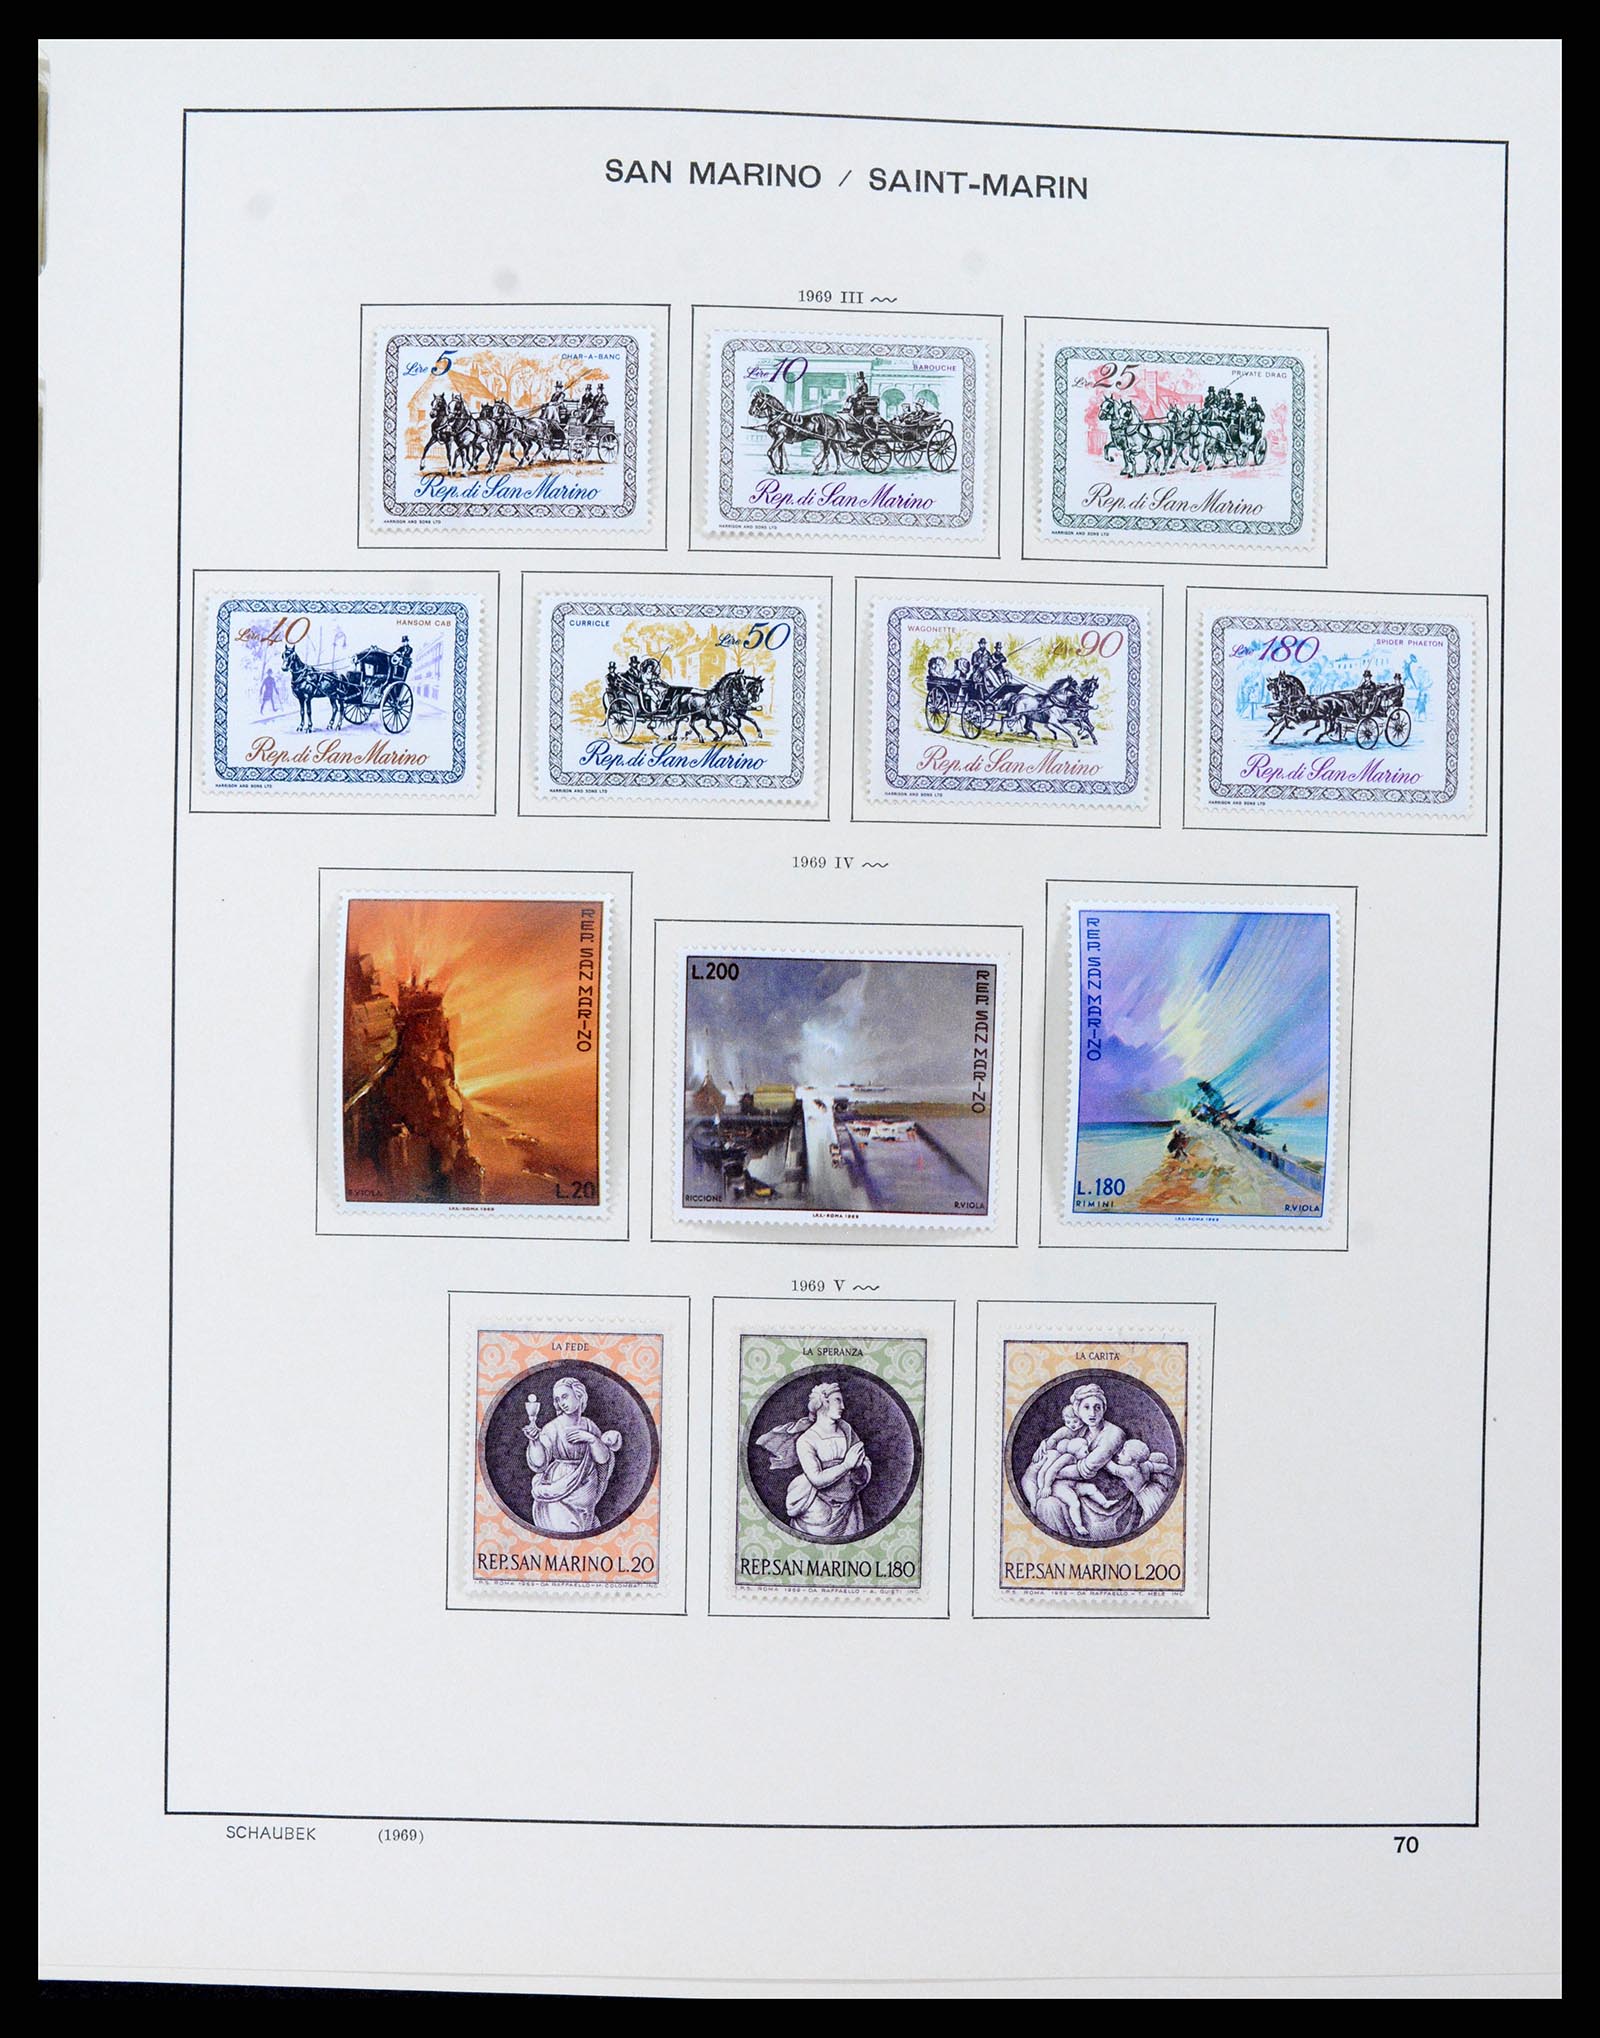 37556 073 - Stamp collection 37556 San Marino 1877-2017.